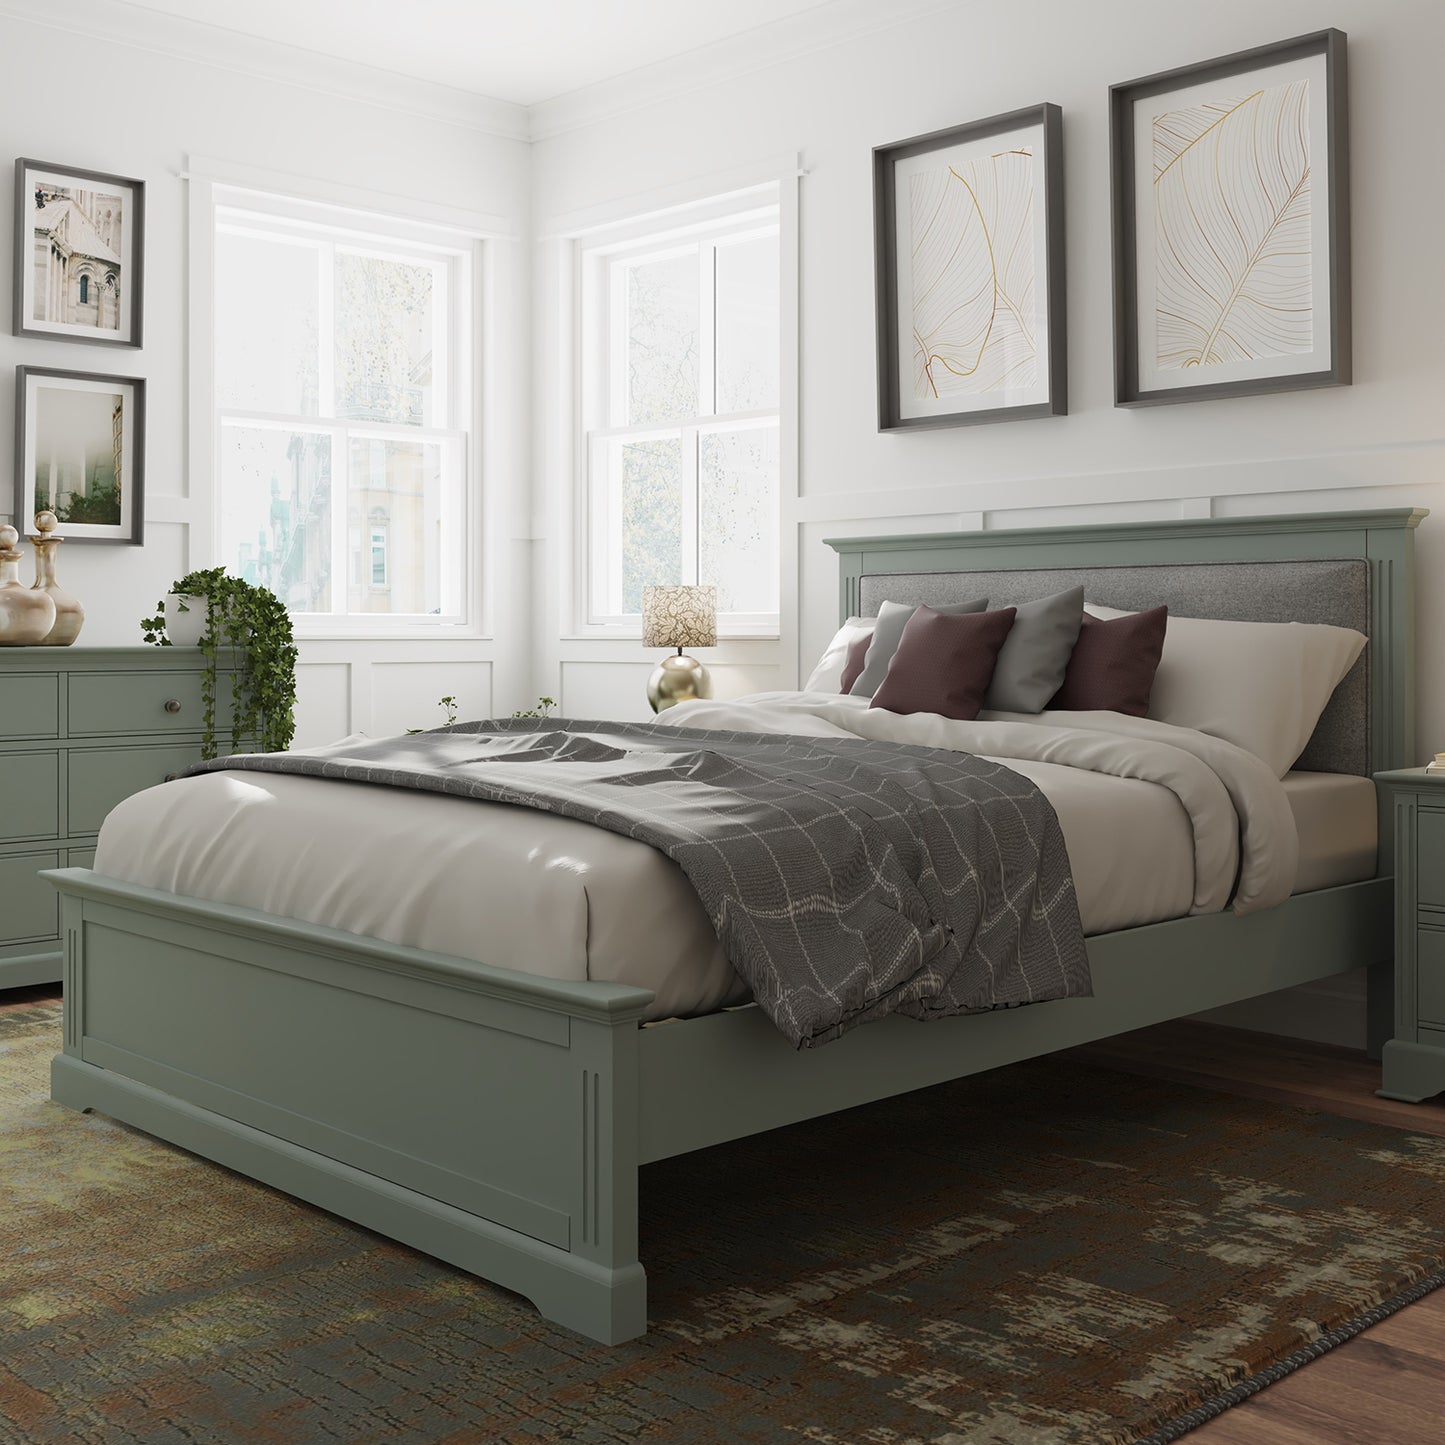 The Billingford Olive Painted Bedroom Range